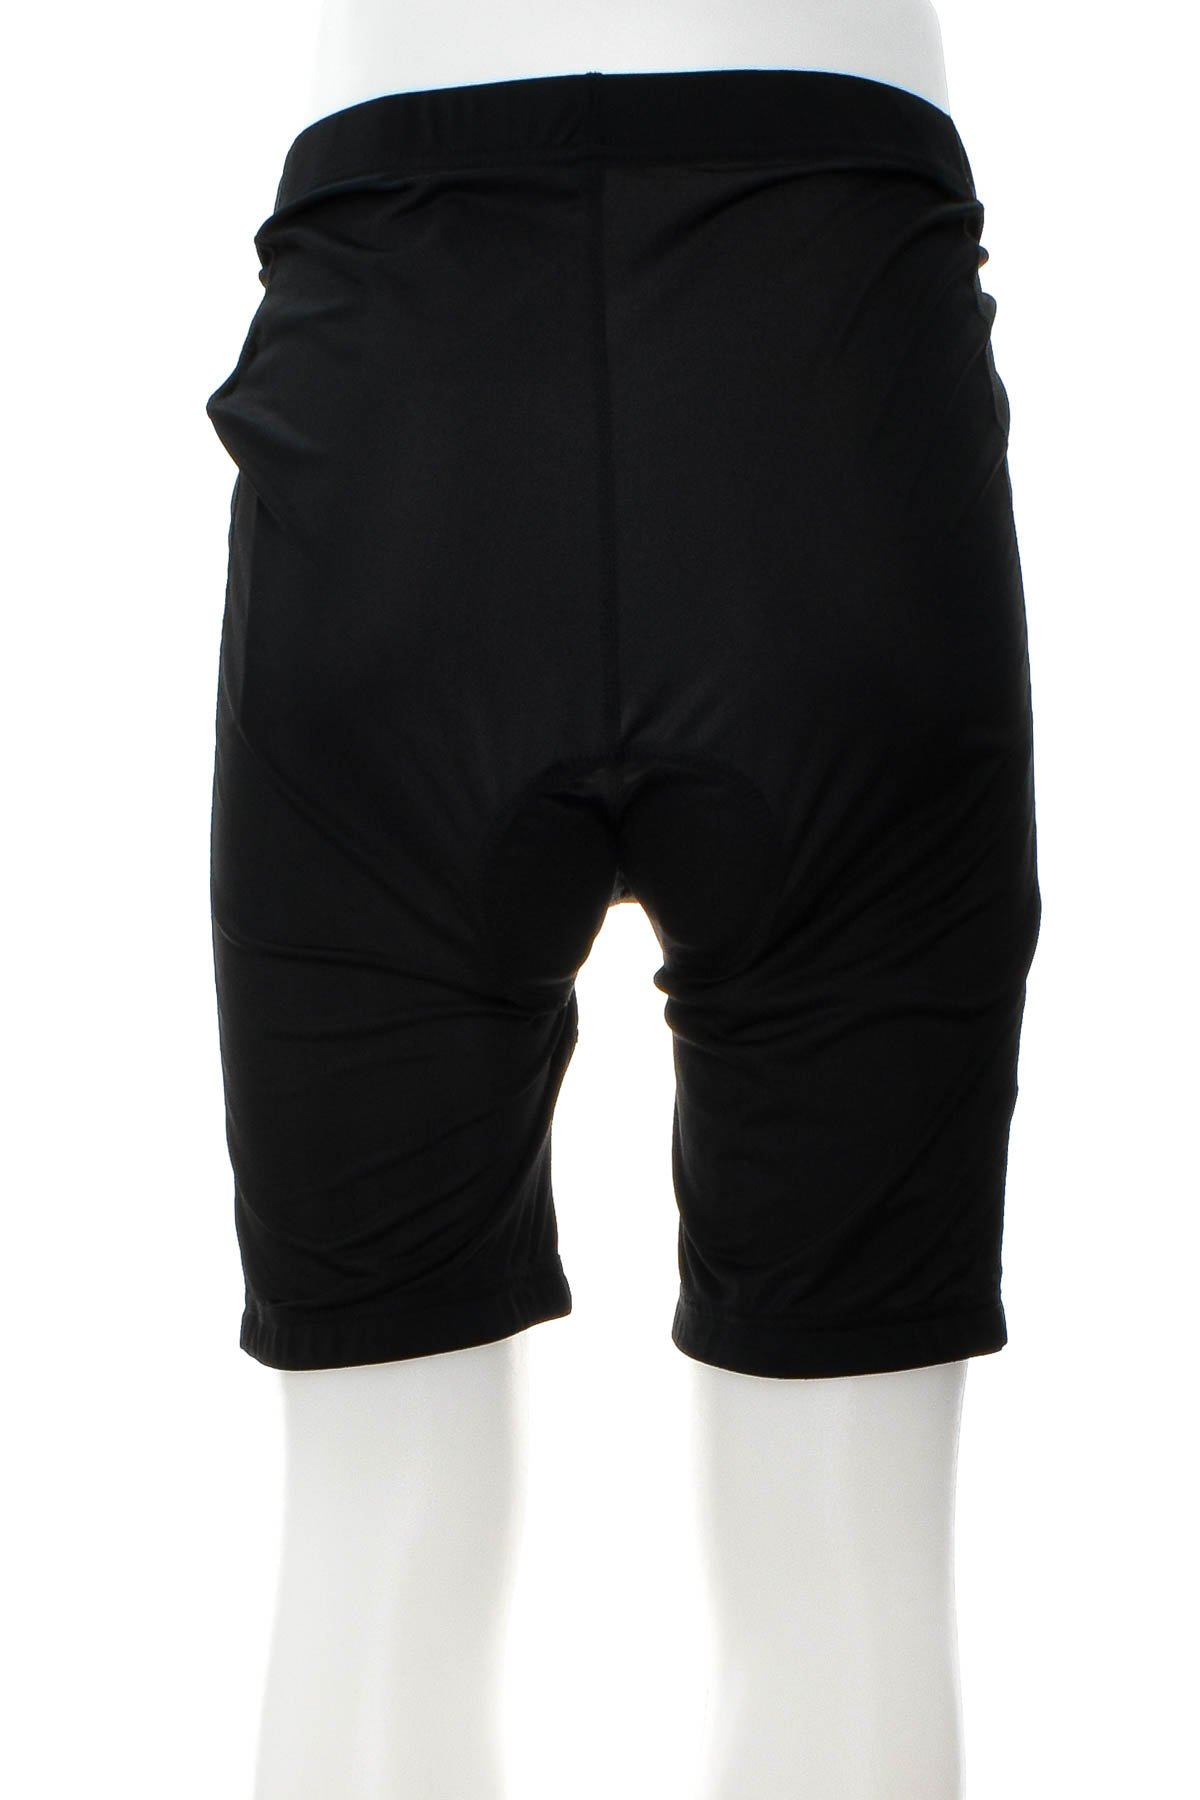 Men's shorts for cycling - Crane - 1